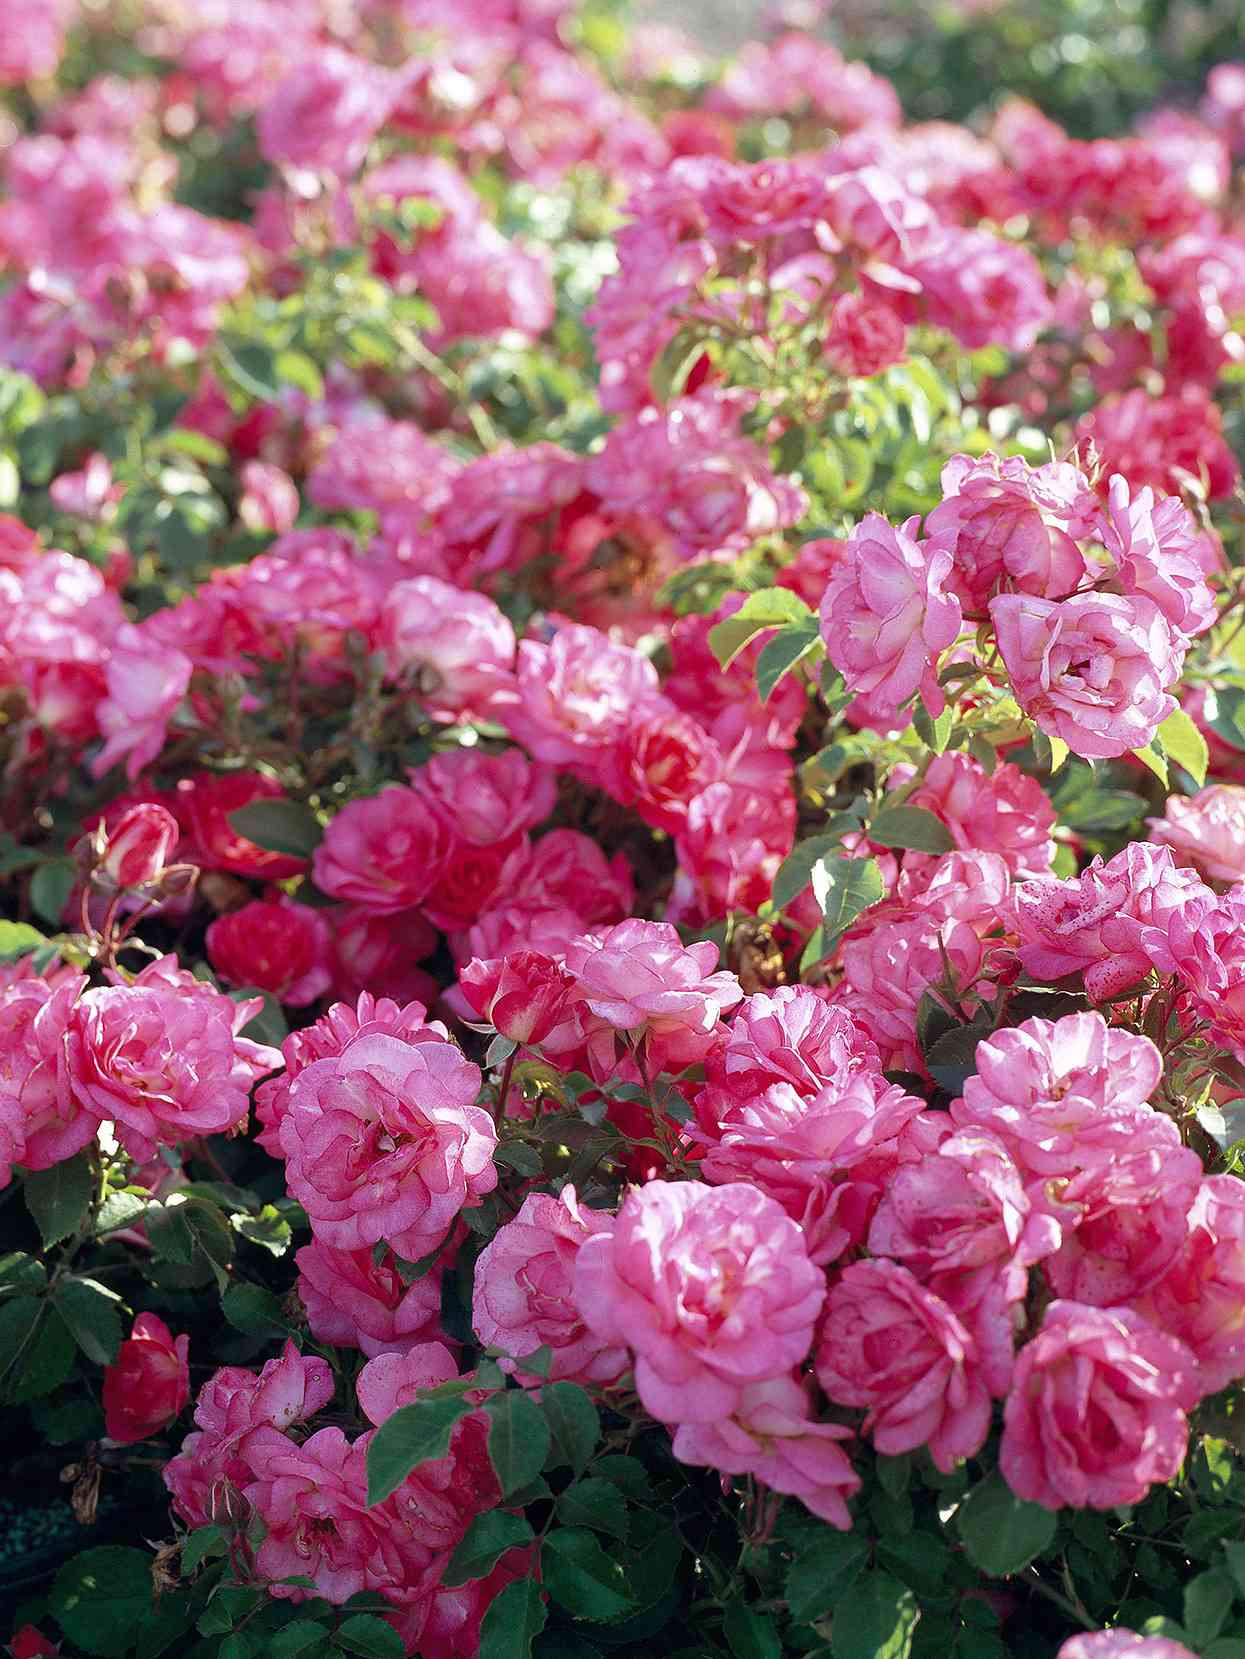 sunrise sunset rose 'baiset' with pink flowers